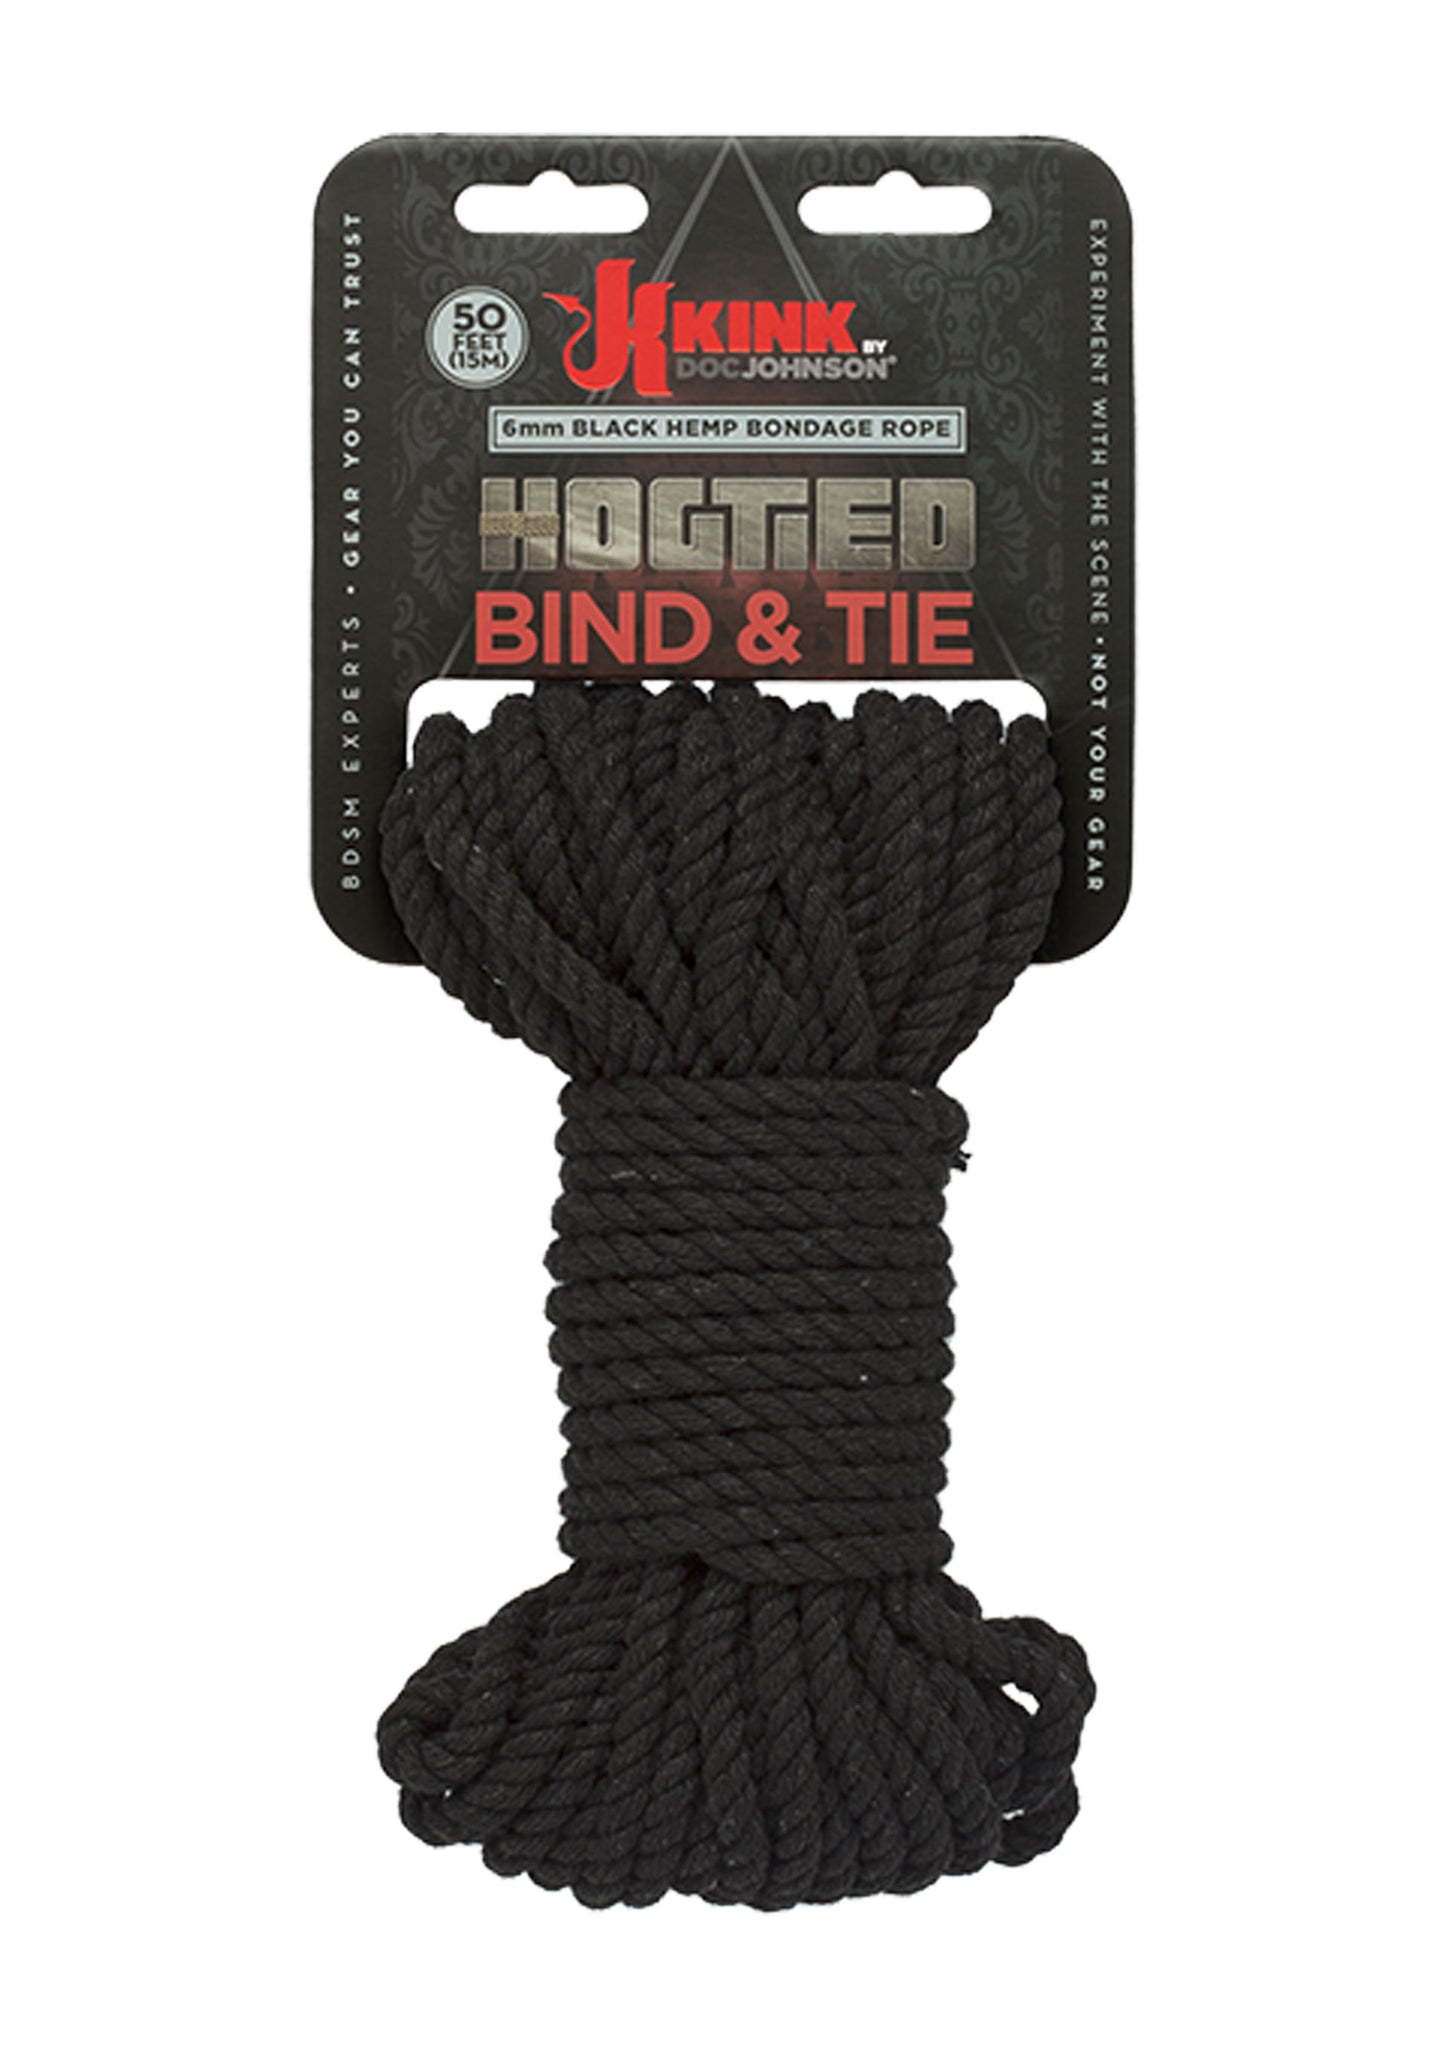 KINK - Black Hemp 50ft rope